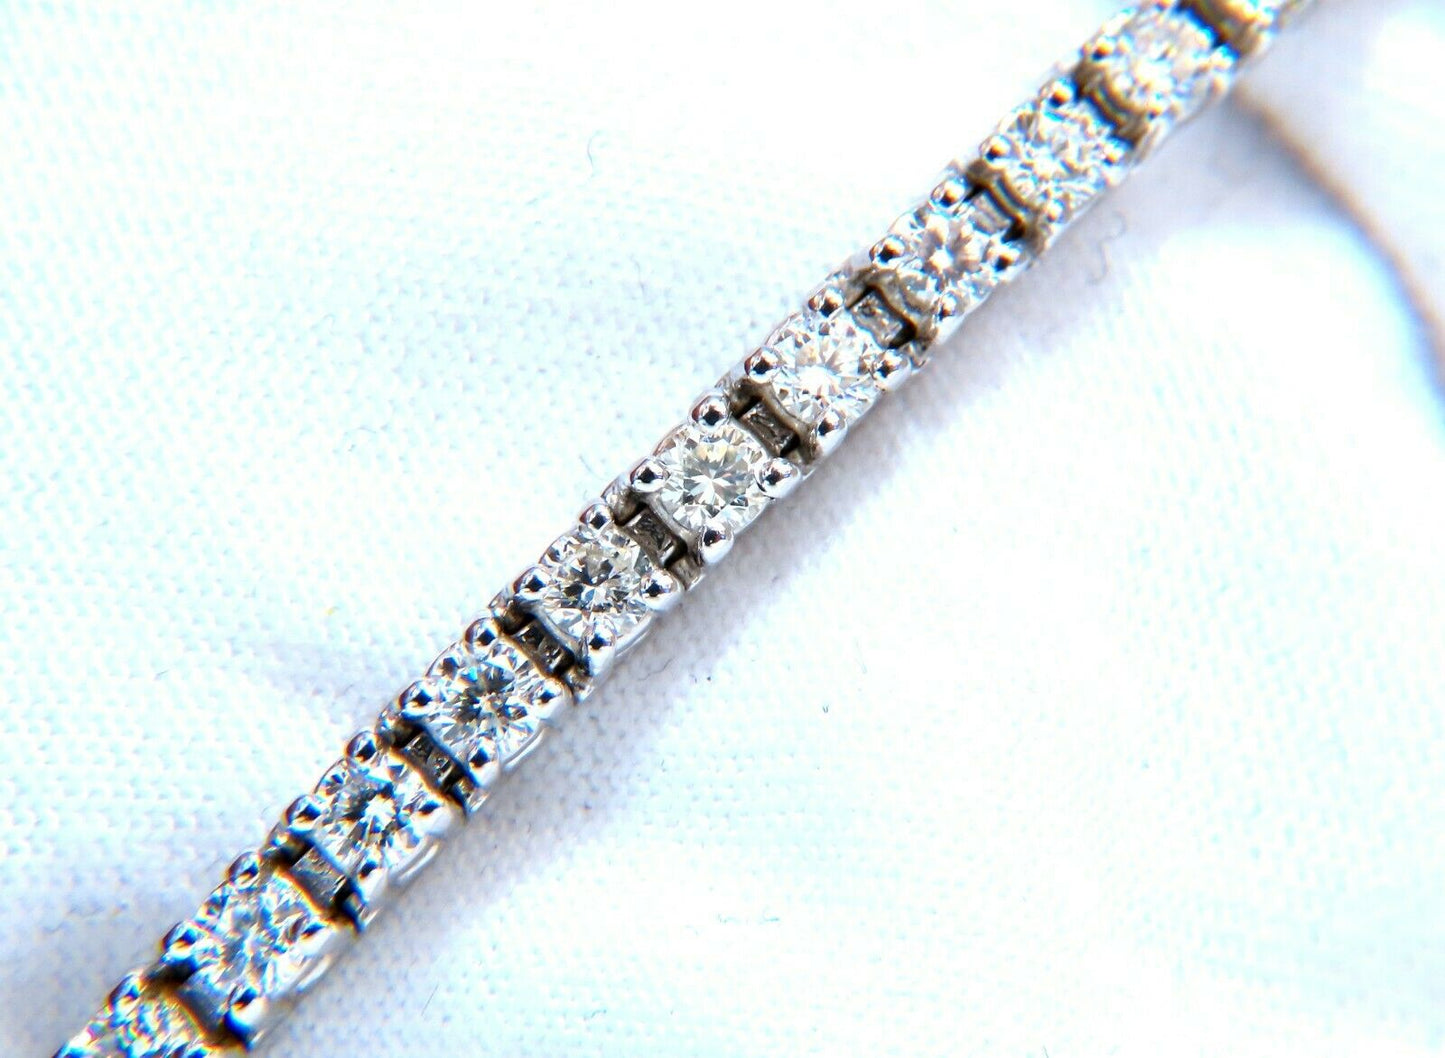 3.75 carat natural round diamonds link tennis bracelet 14kt